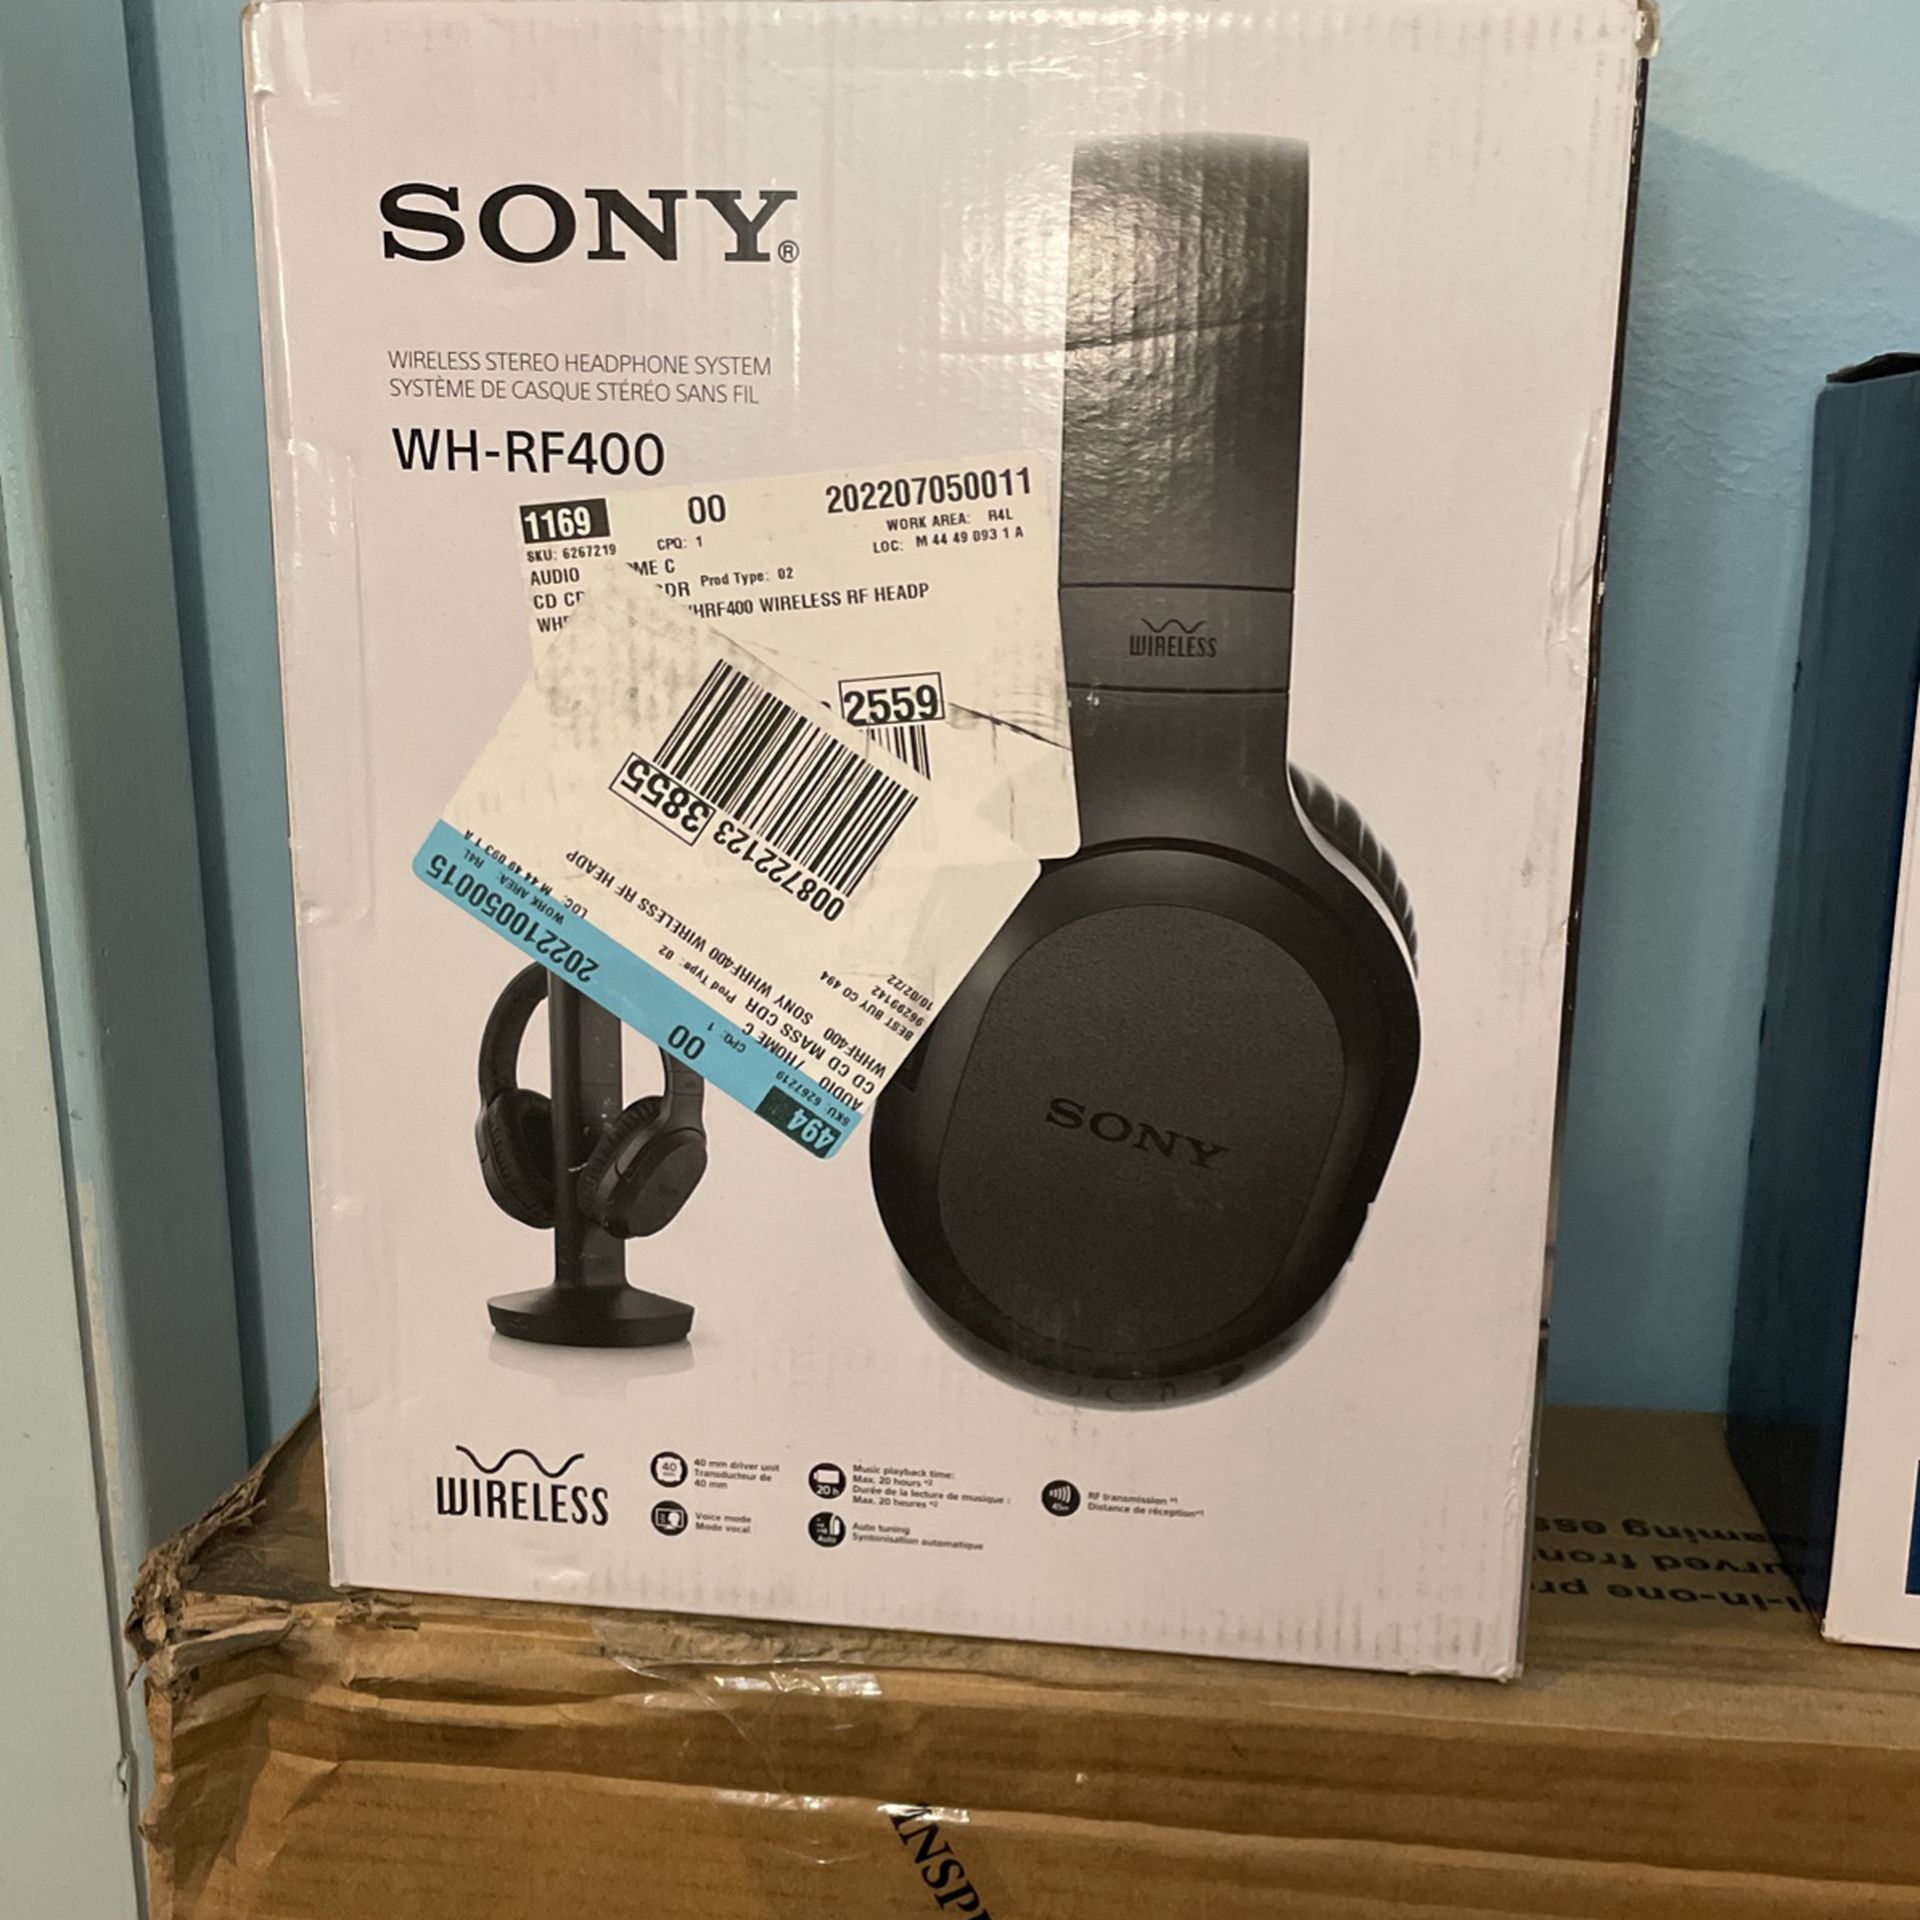 Sony Wireless Headphones System Wh-rf400